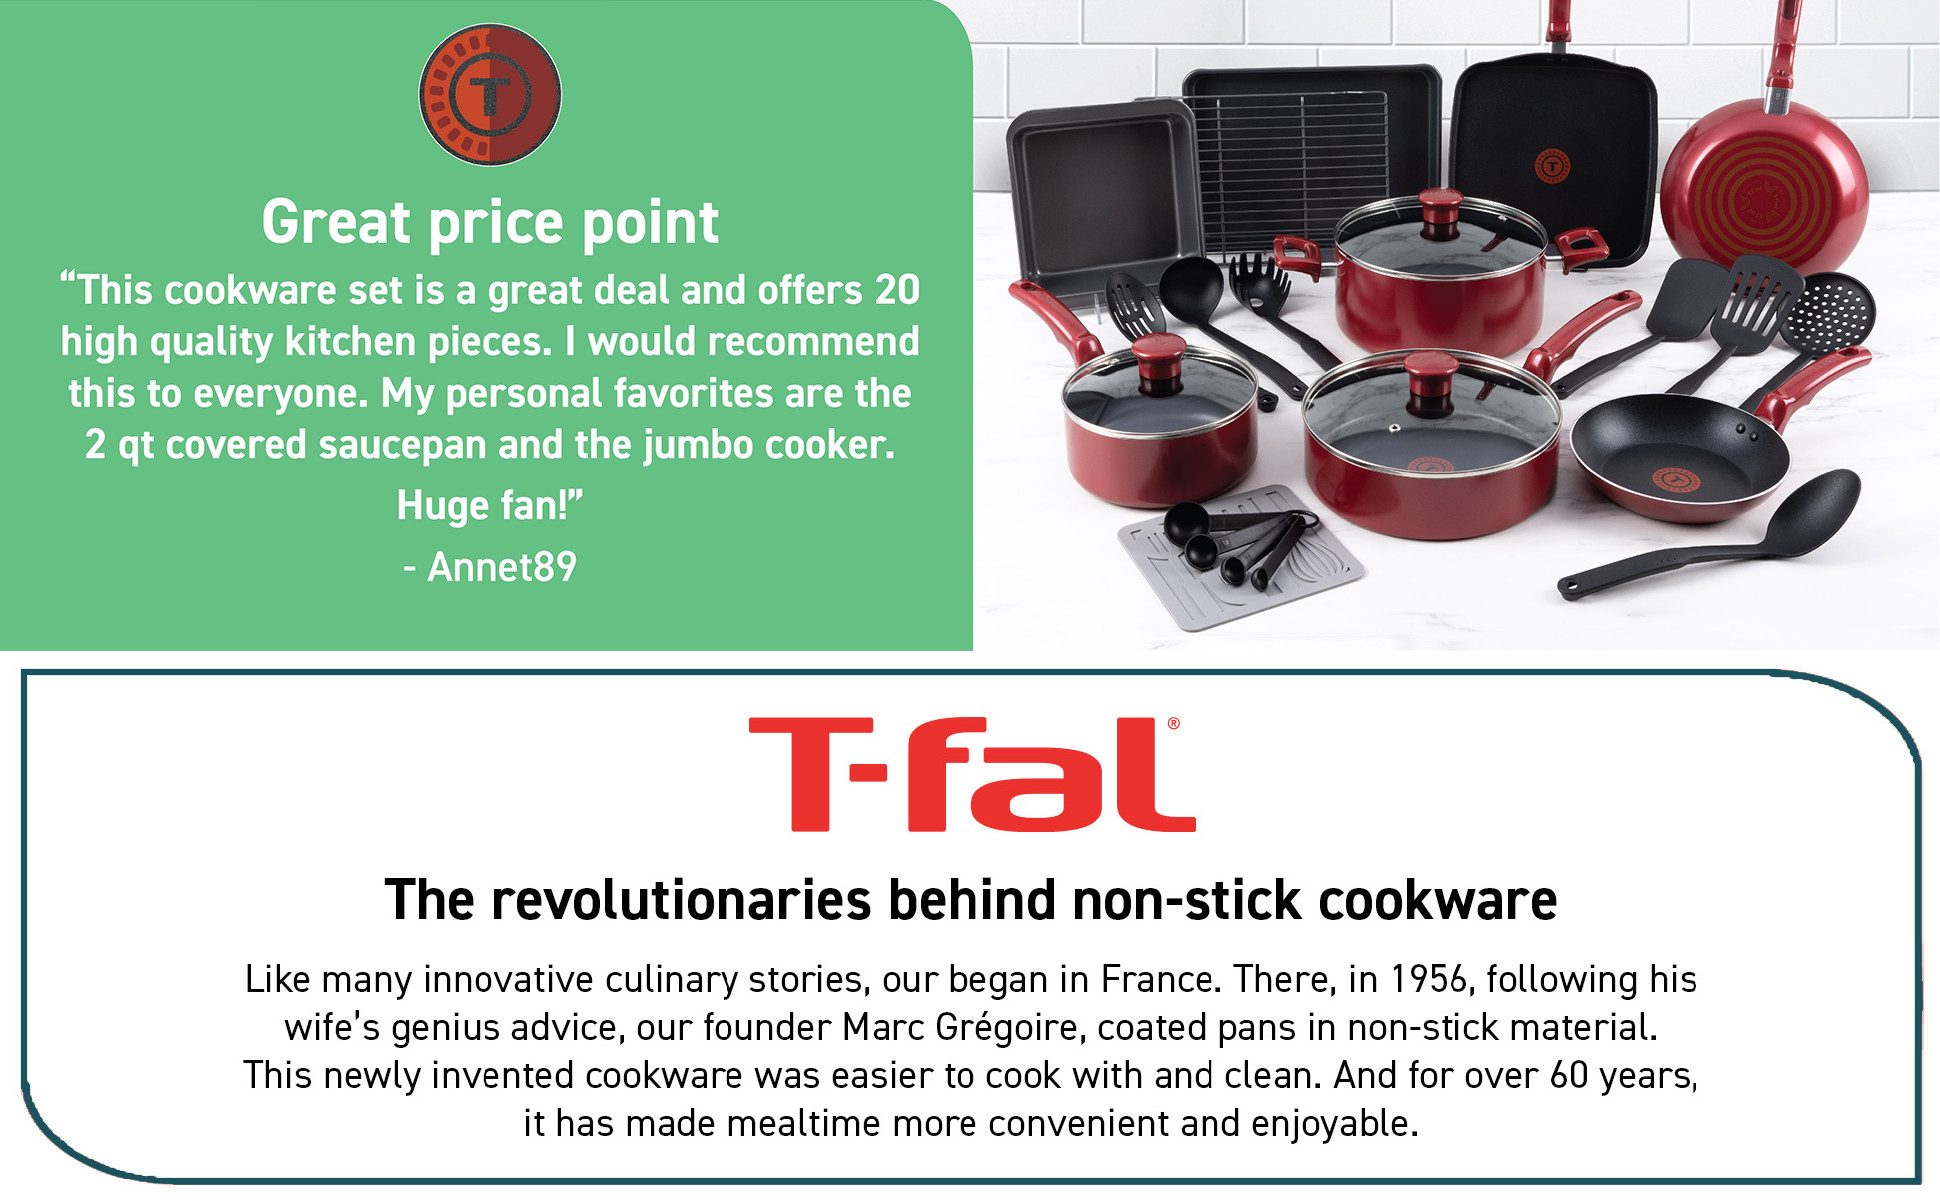 T-fal Kitchen Solutions 21-Piece Nonstick Cookware Set, Black 